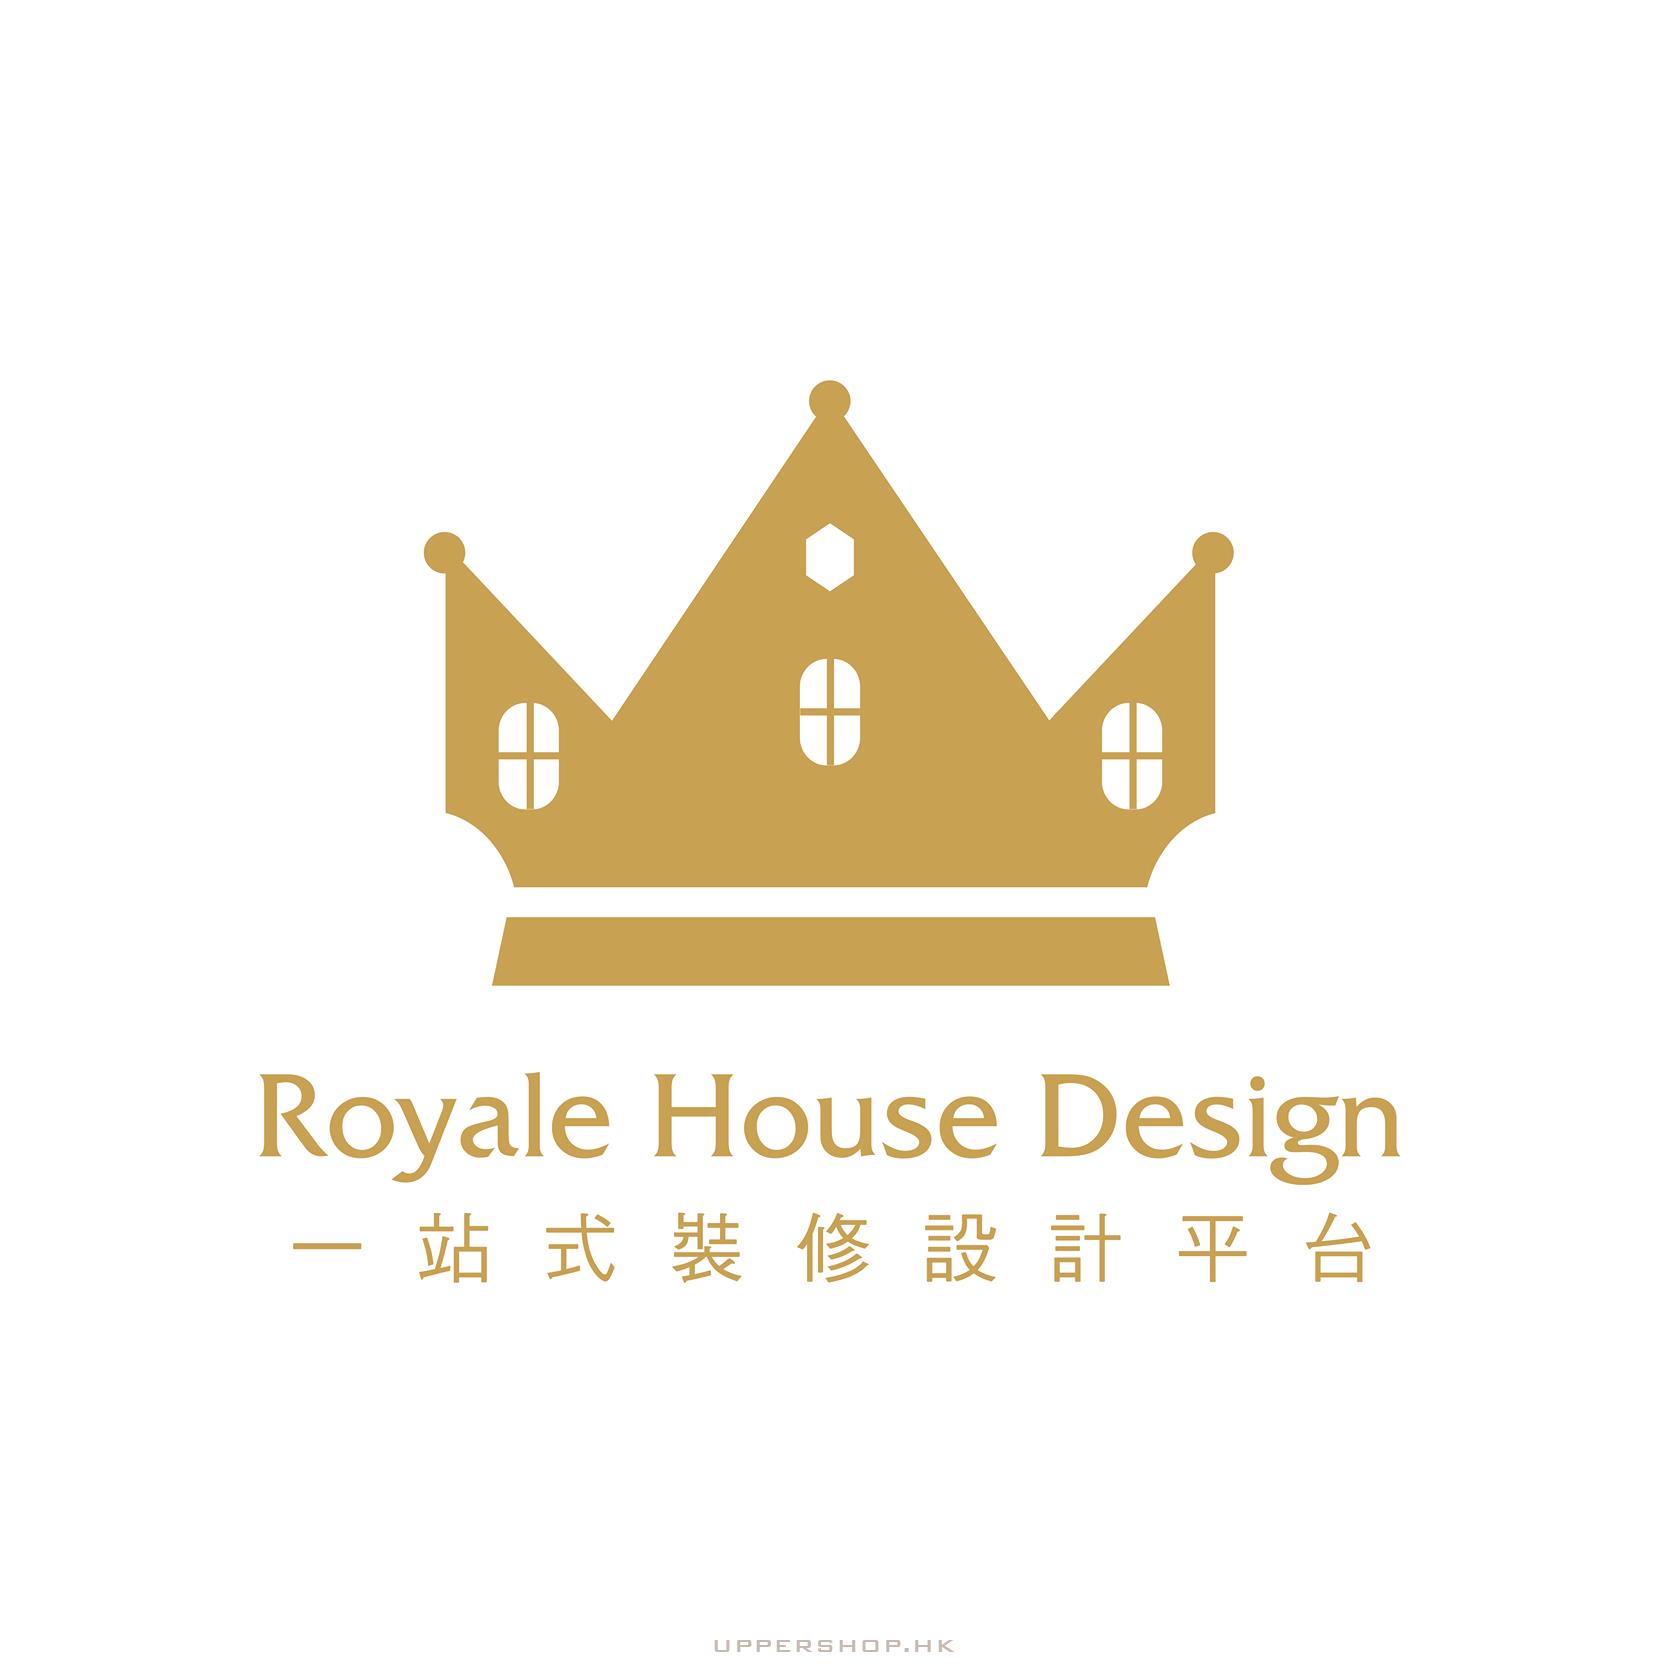 Royale House Design